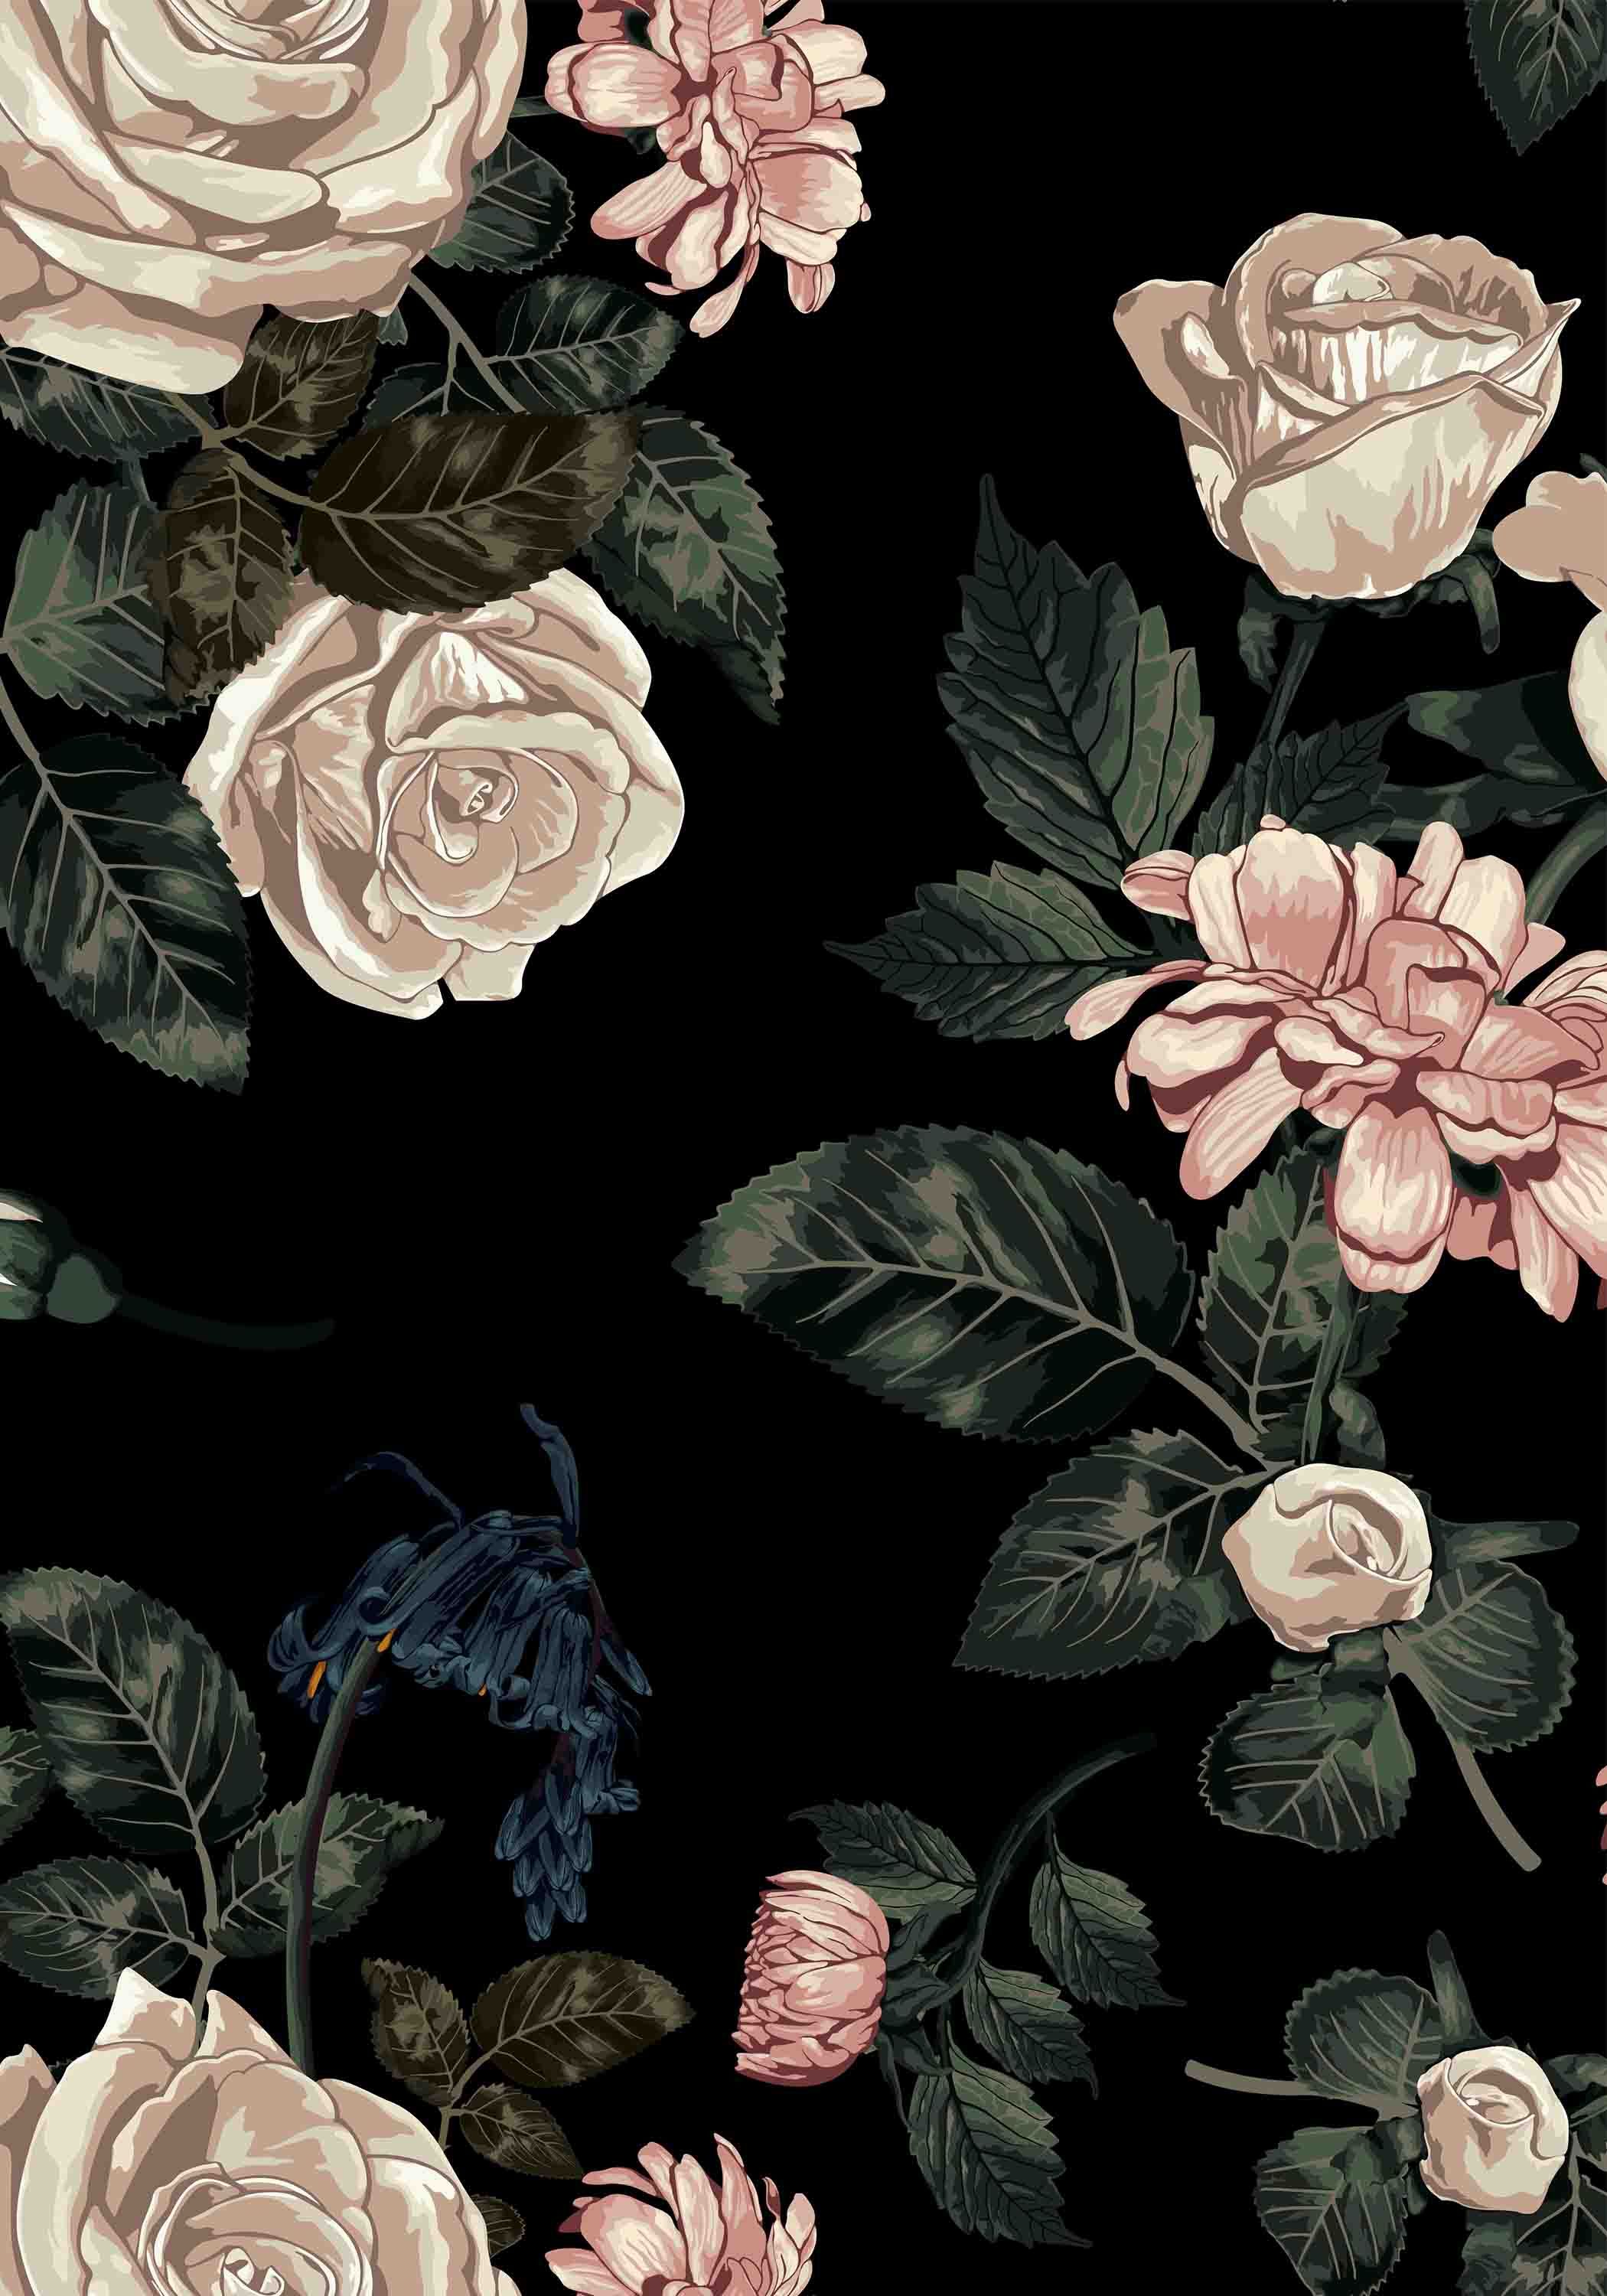 Wallpaper Floral Background